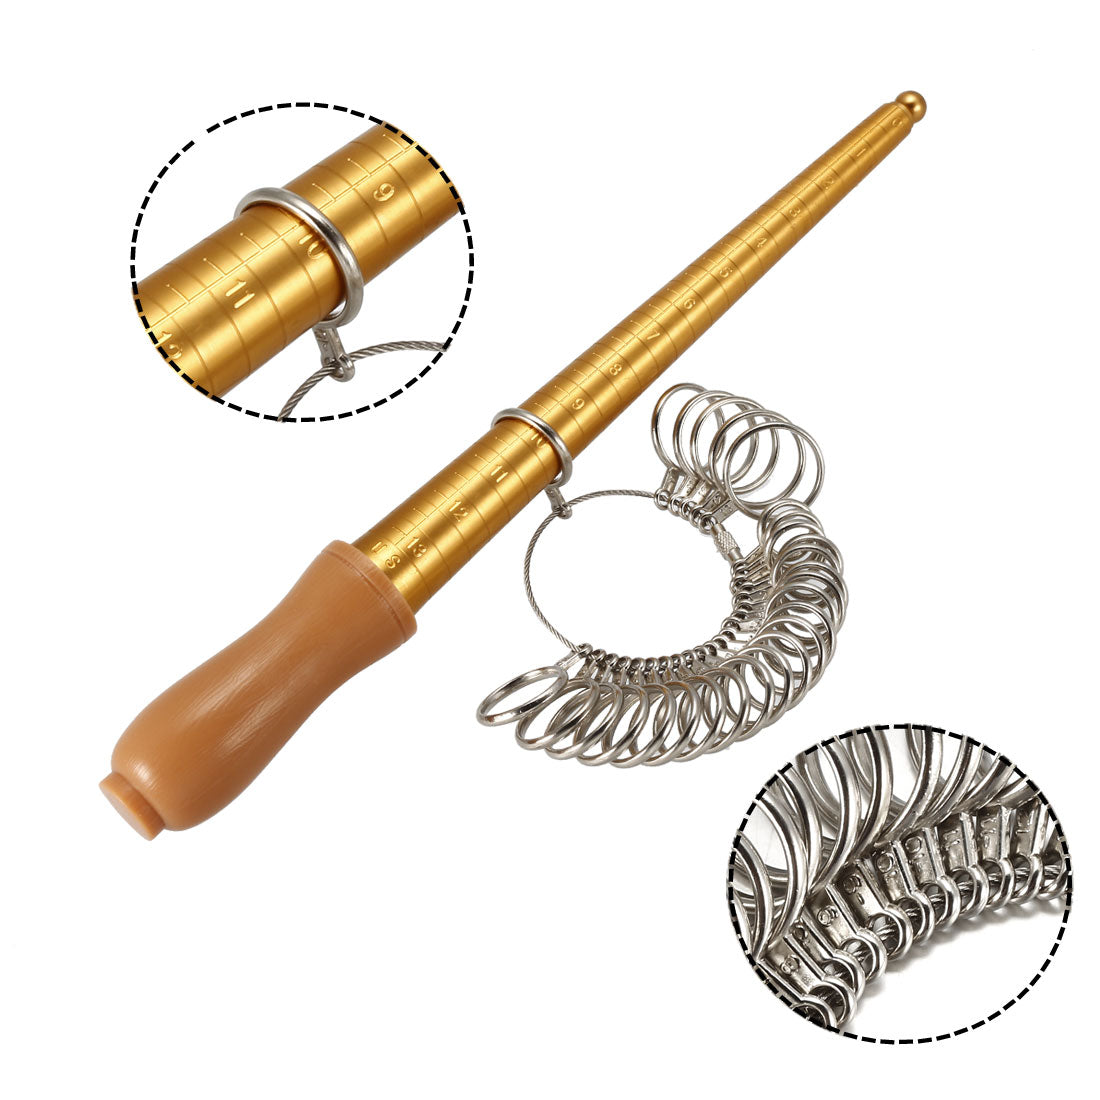 uxcell Uxcell Ring Sizer Mandrel Kit US 0-13 Finger Measuring Stick Ruler Gauge Copper Plating Aluminum with 27 Zinc Alloy Circle Models Rubber Hammer 1 Set